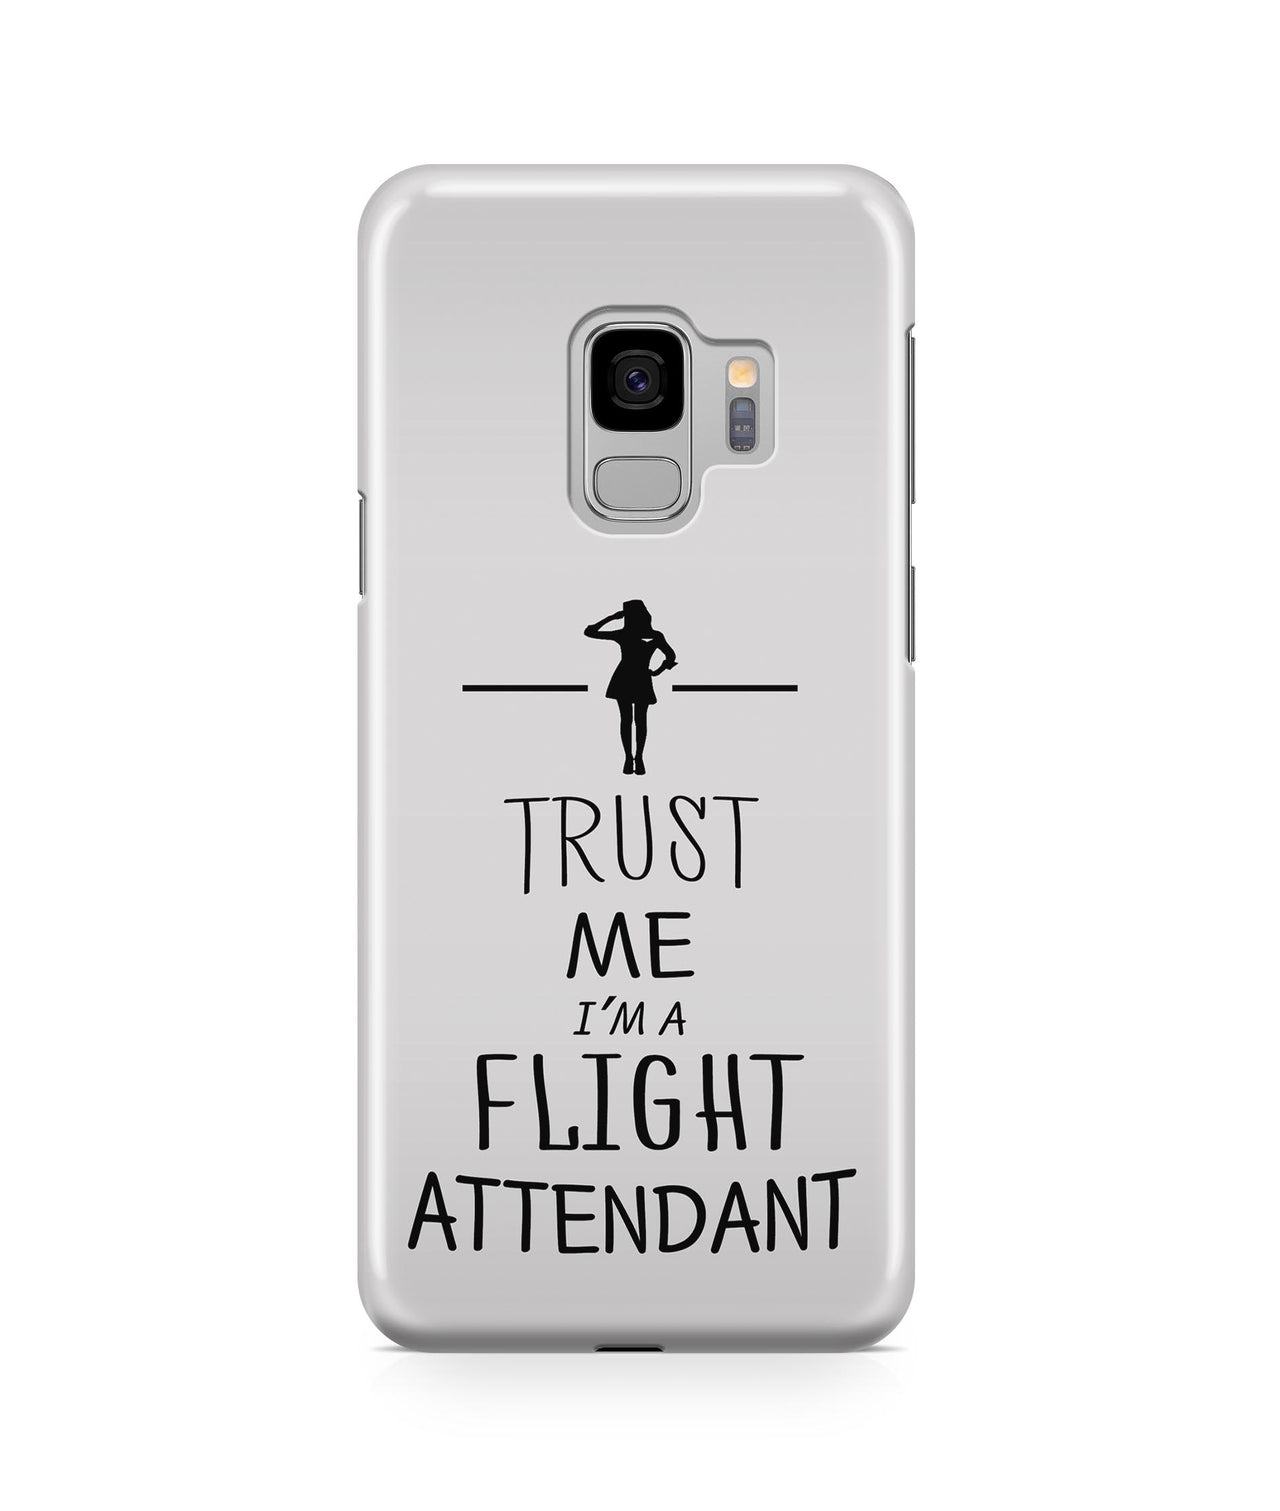 Trust Me I’m a Flight Attendant Designed Samsung J Cases